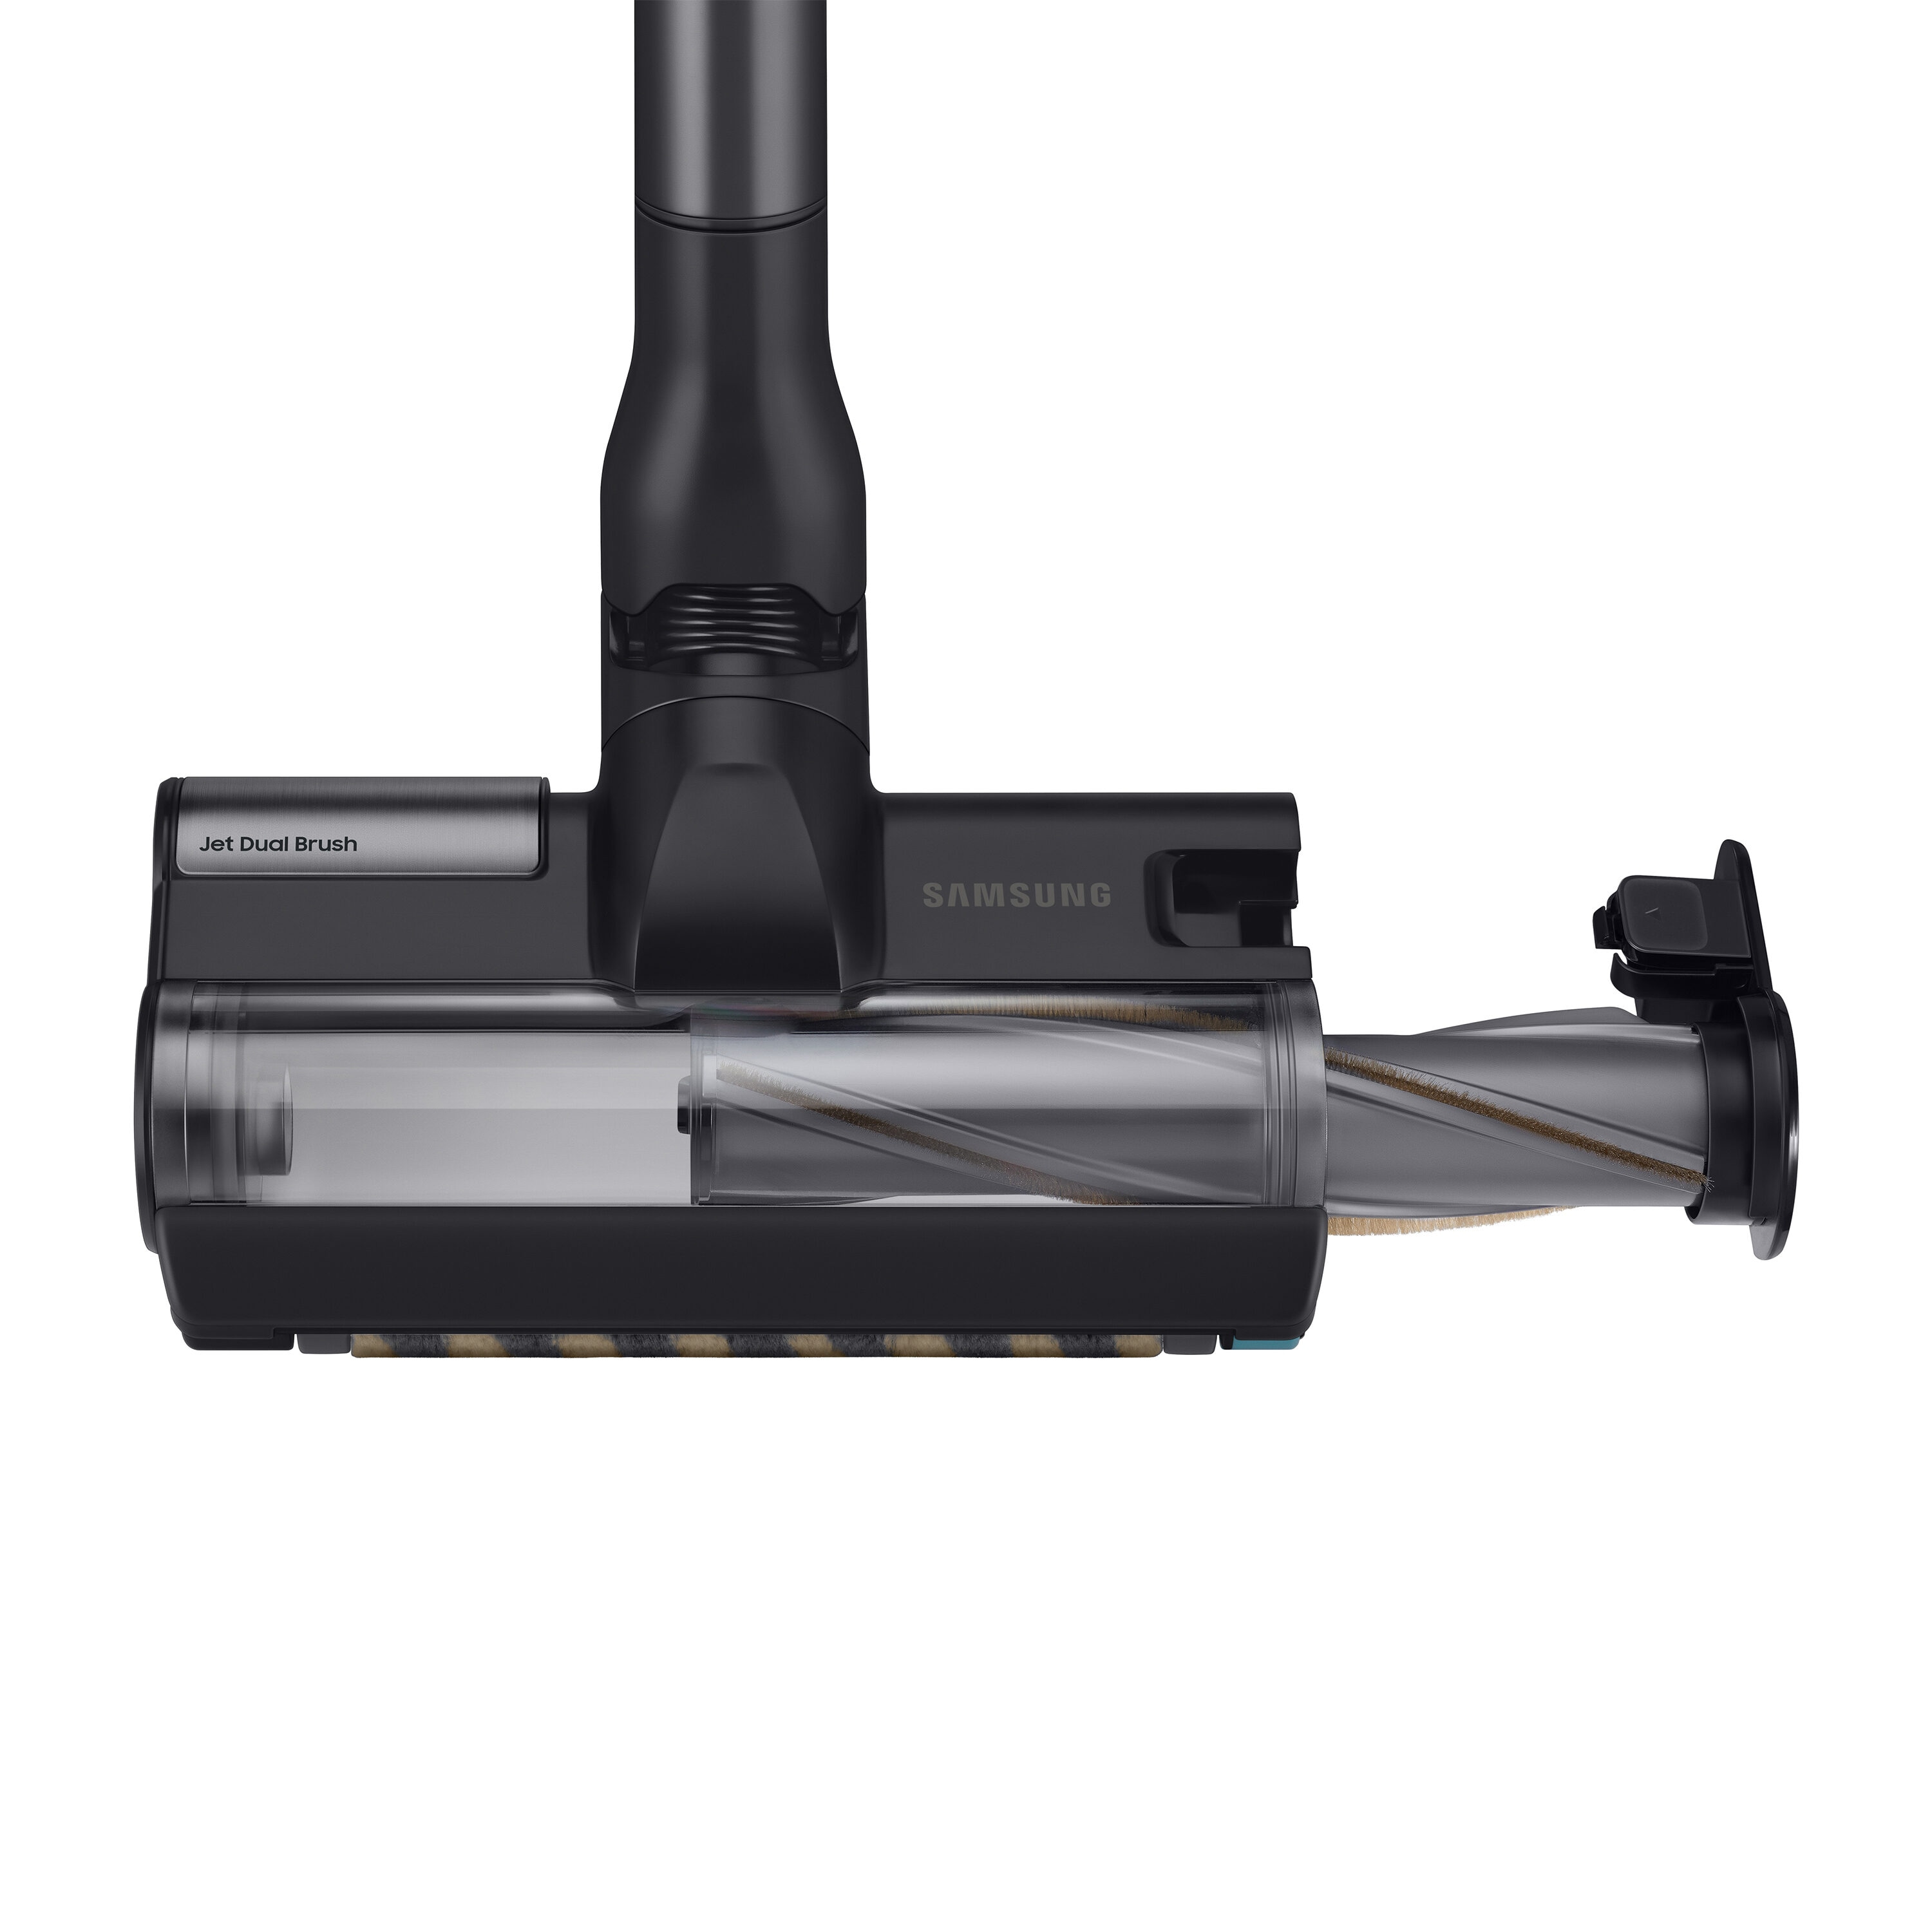 Samsung VS20A9580VW Stick-Vacuums - View #3